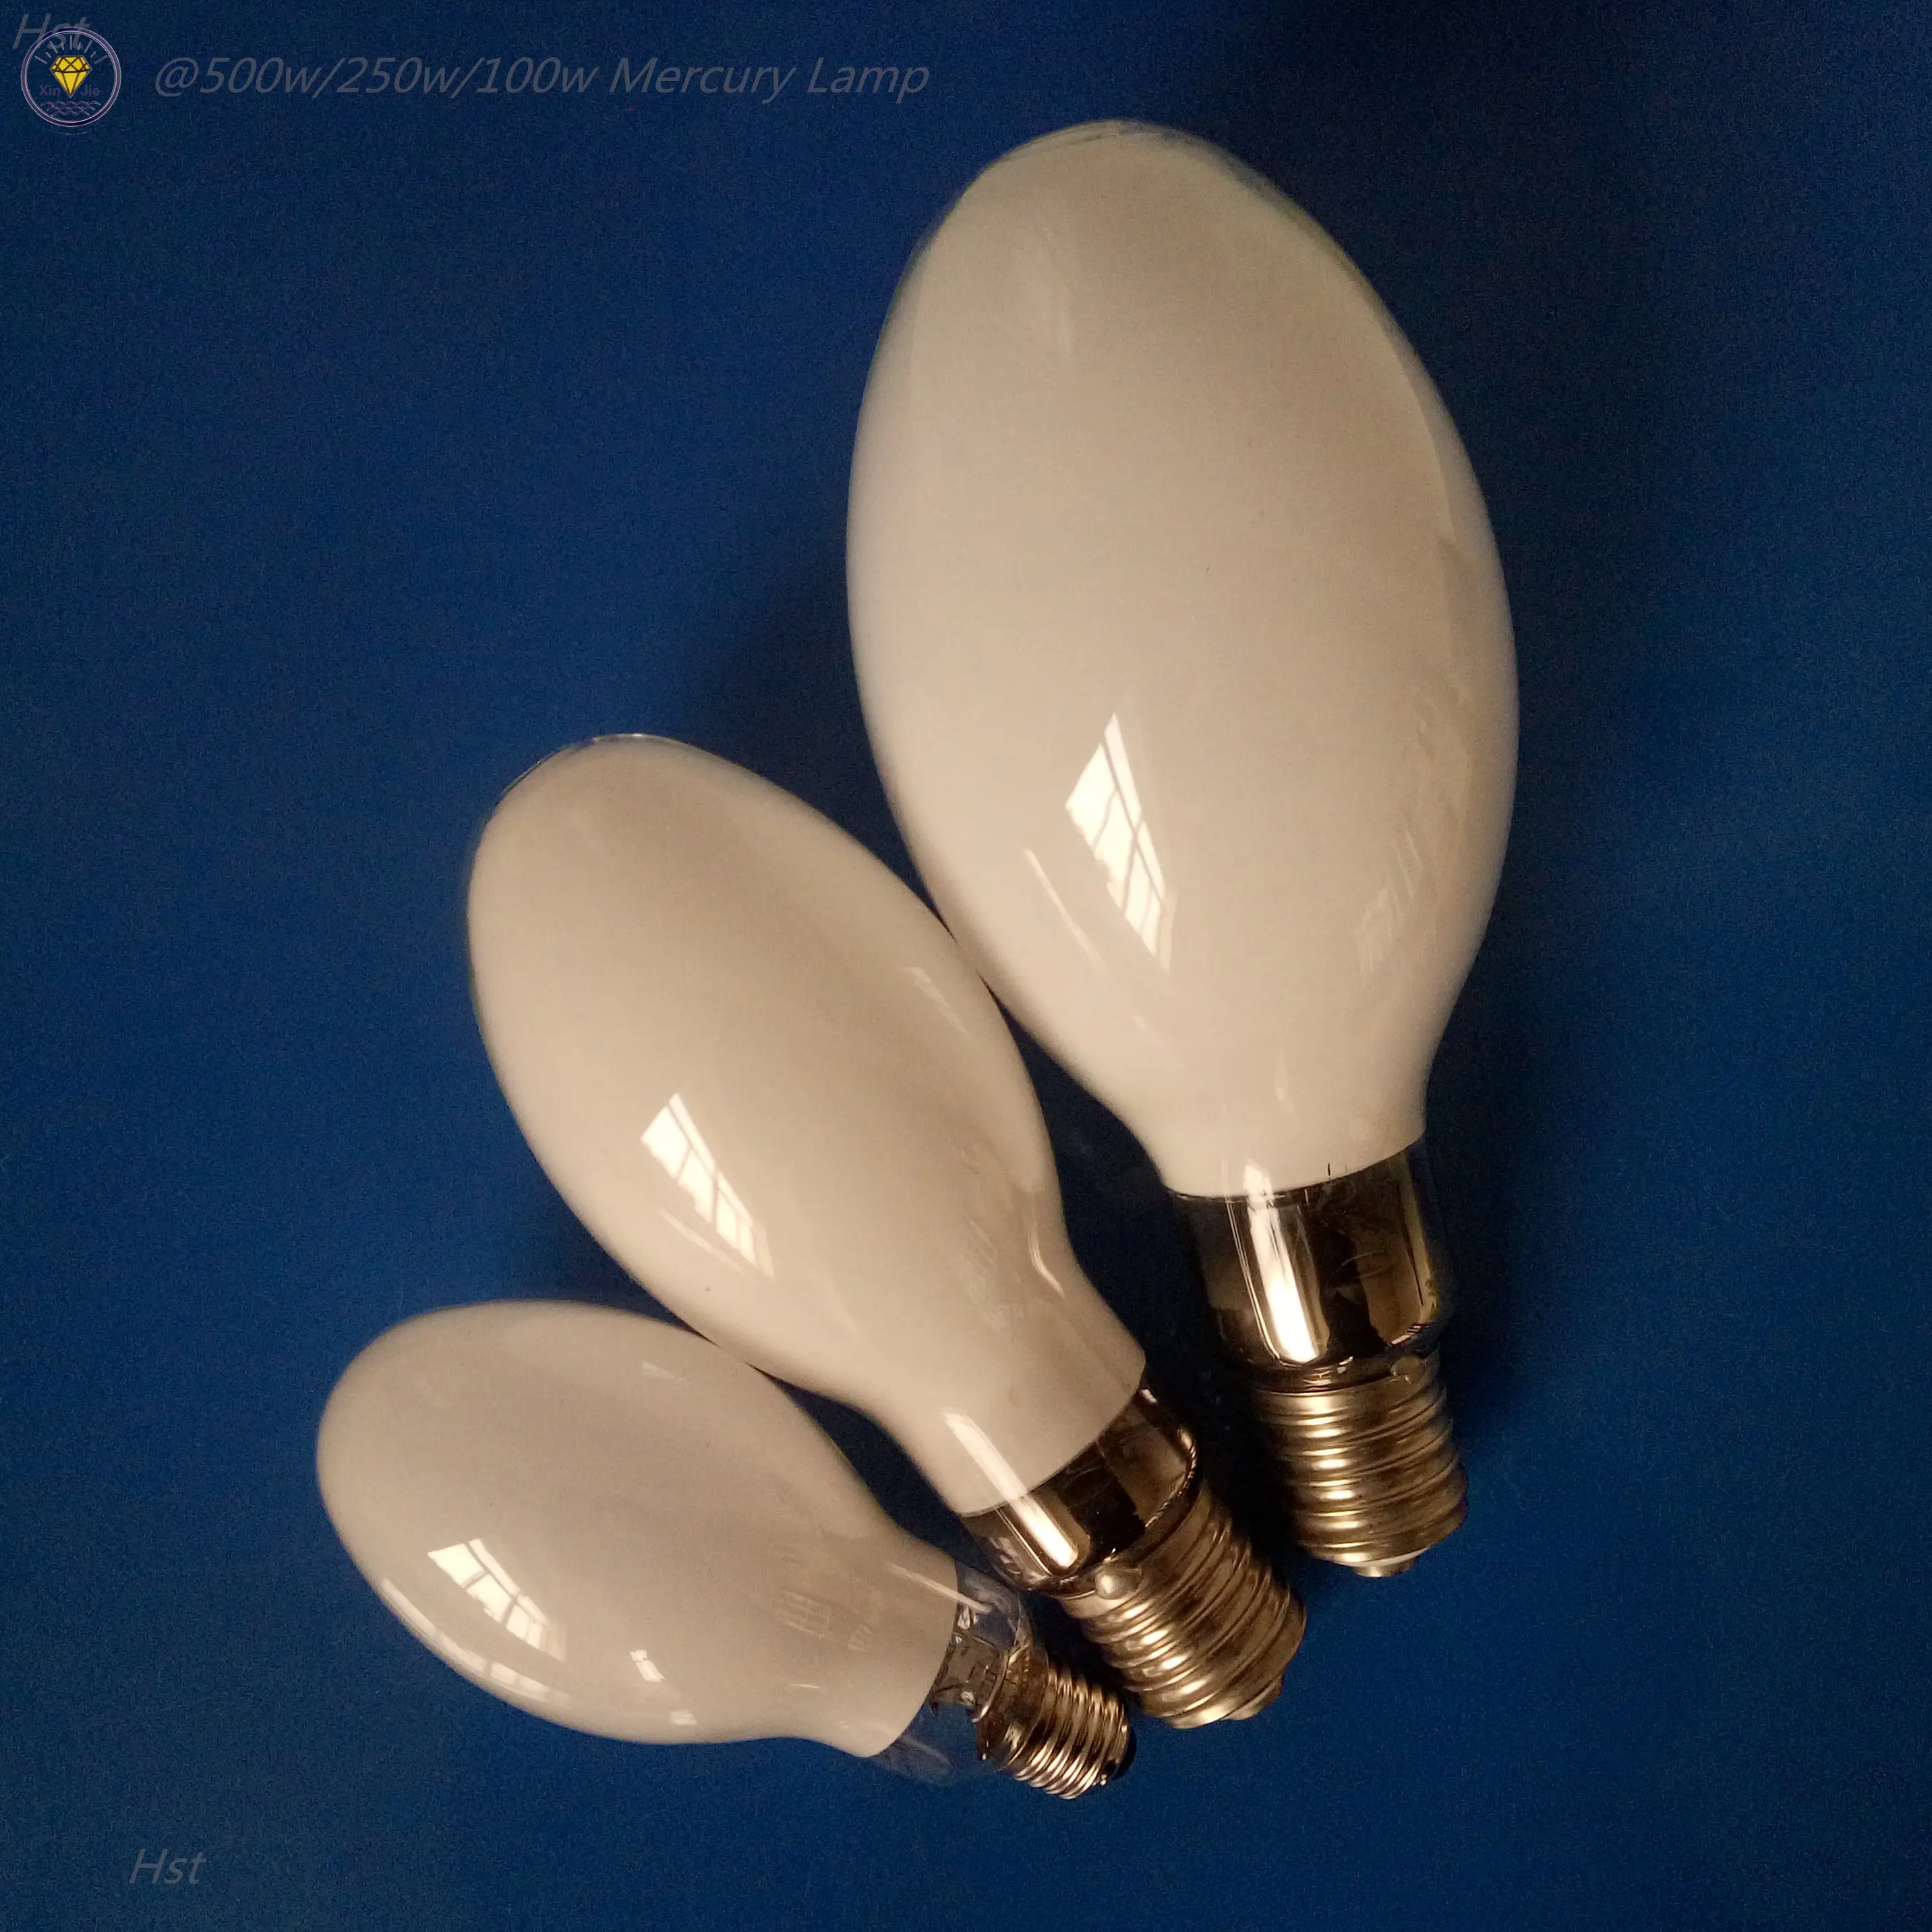 400w mercury vapor lamp HID vapor bulbs ballasted BT shape for enclosed fixtures outdoor lighting arc light